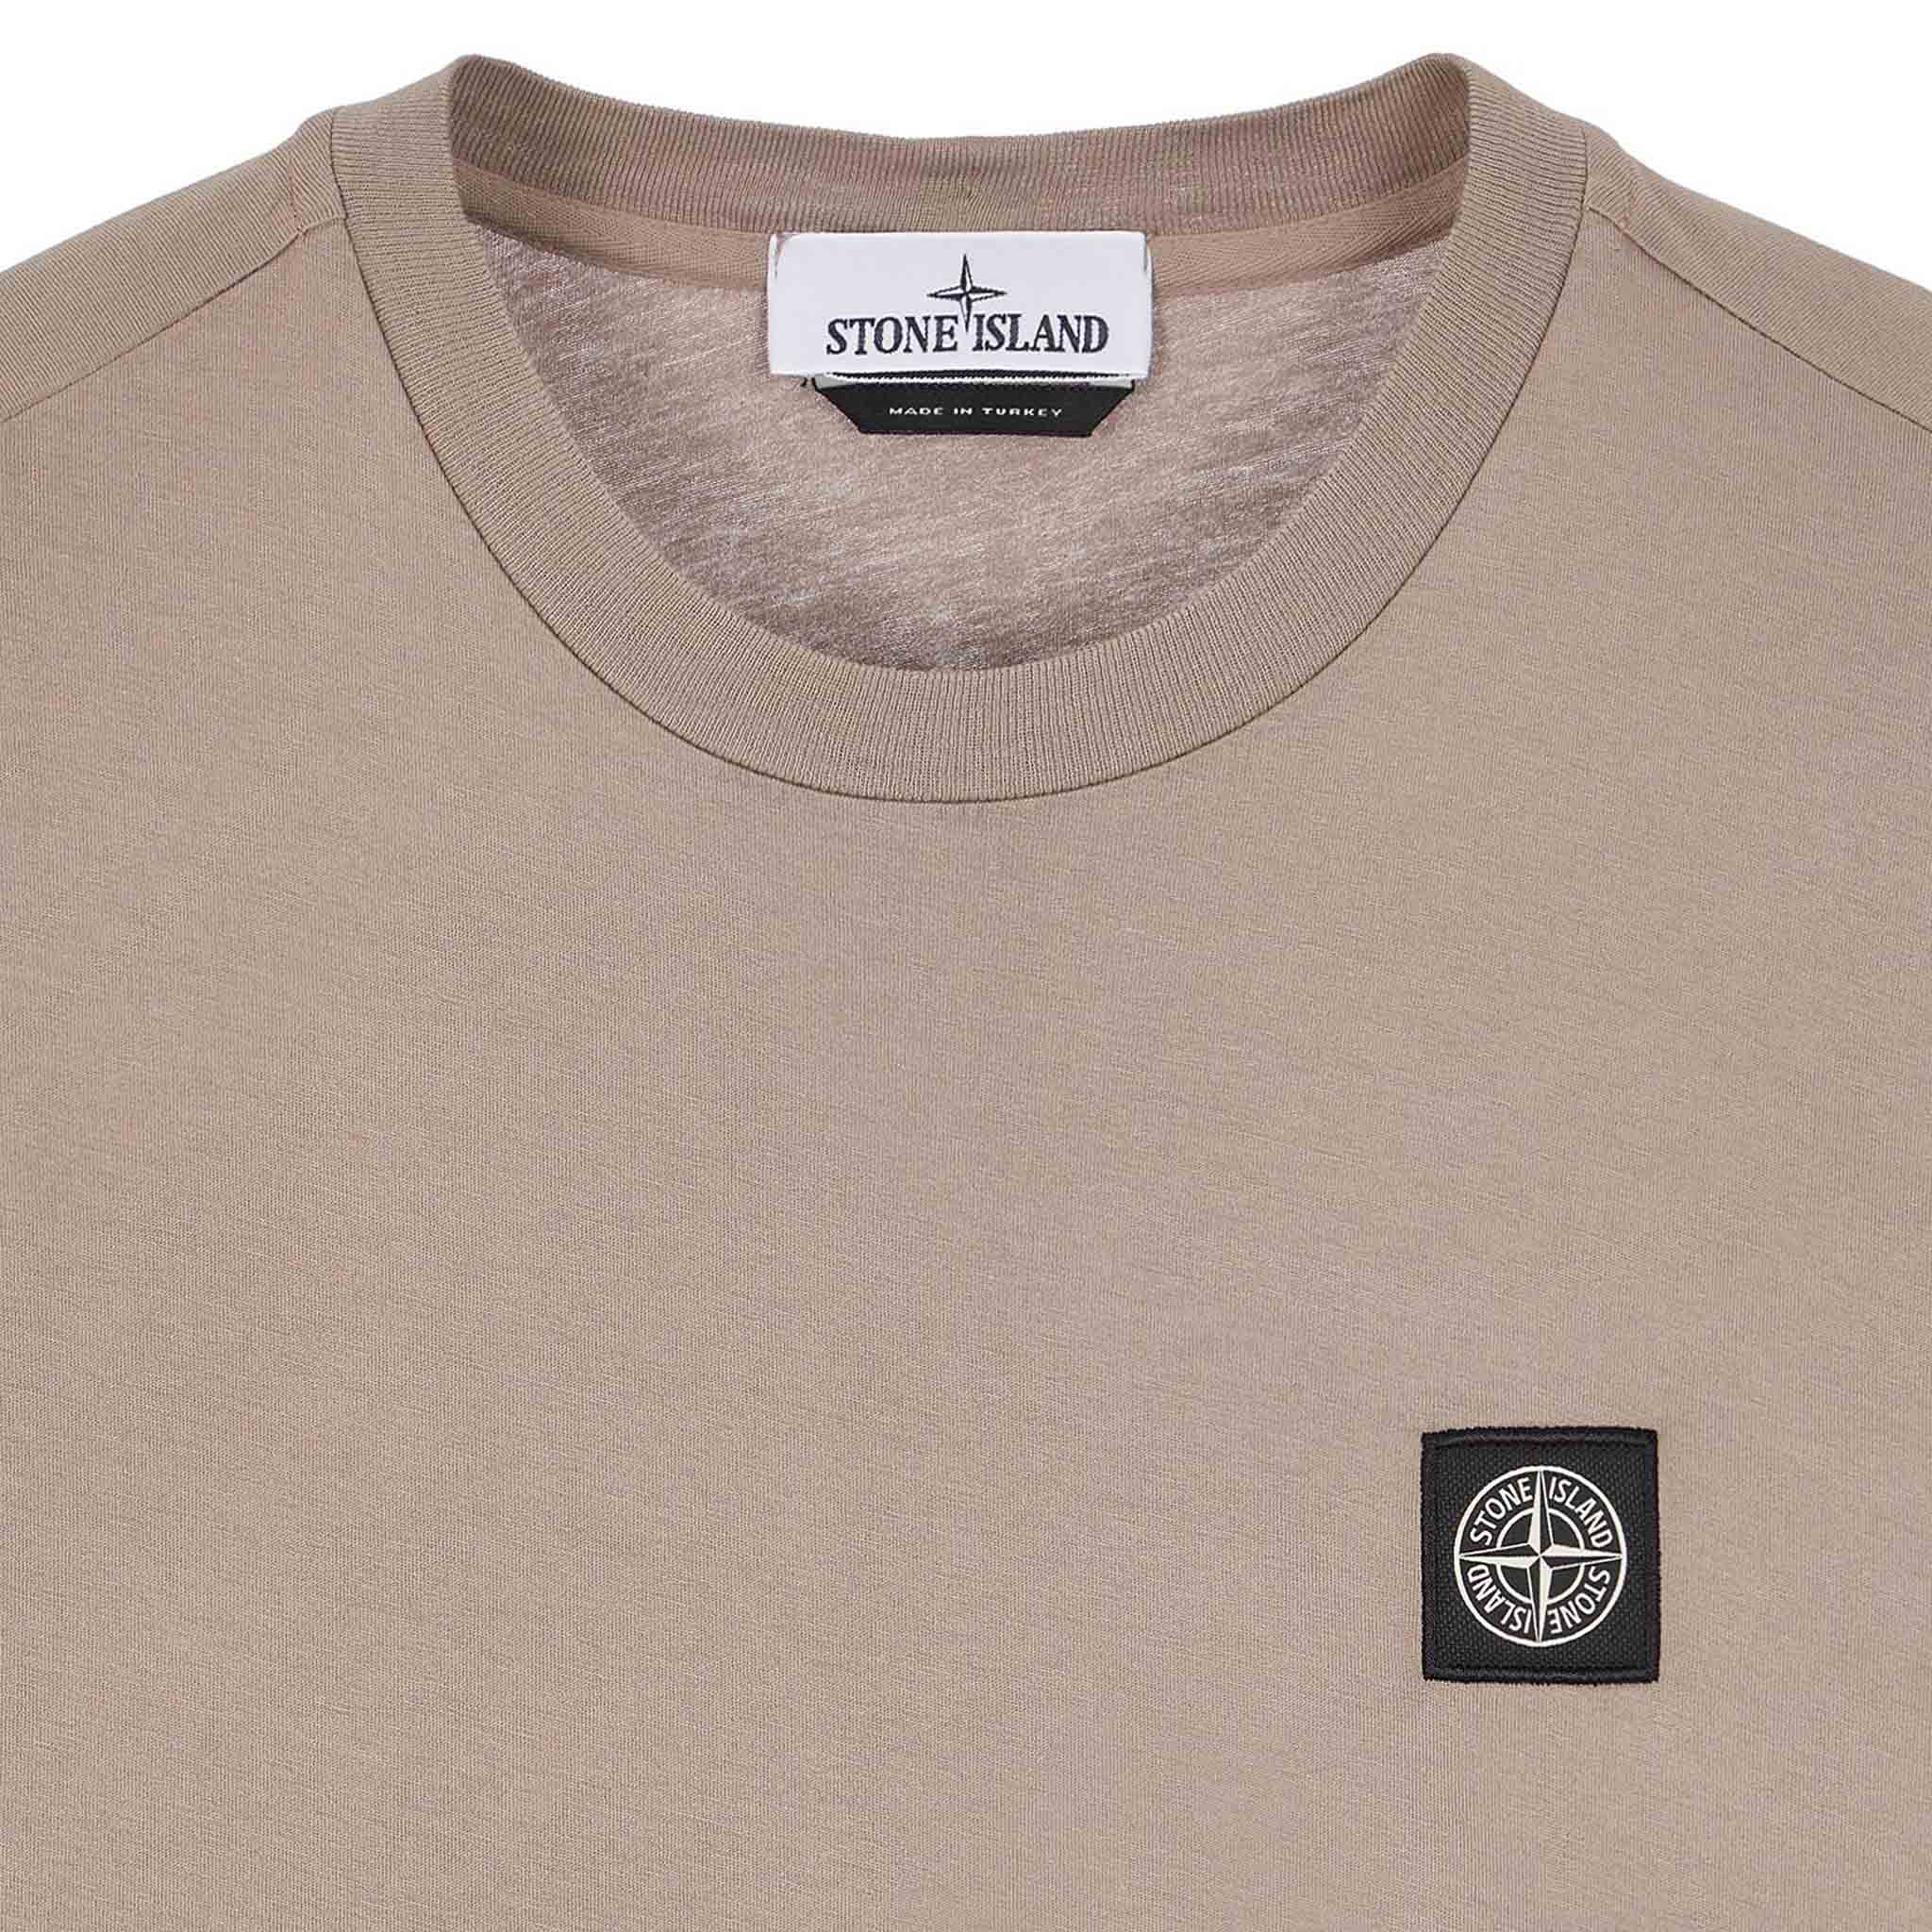 Stone Island Compass Logo T-Shirt in Dove Grey